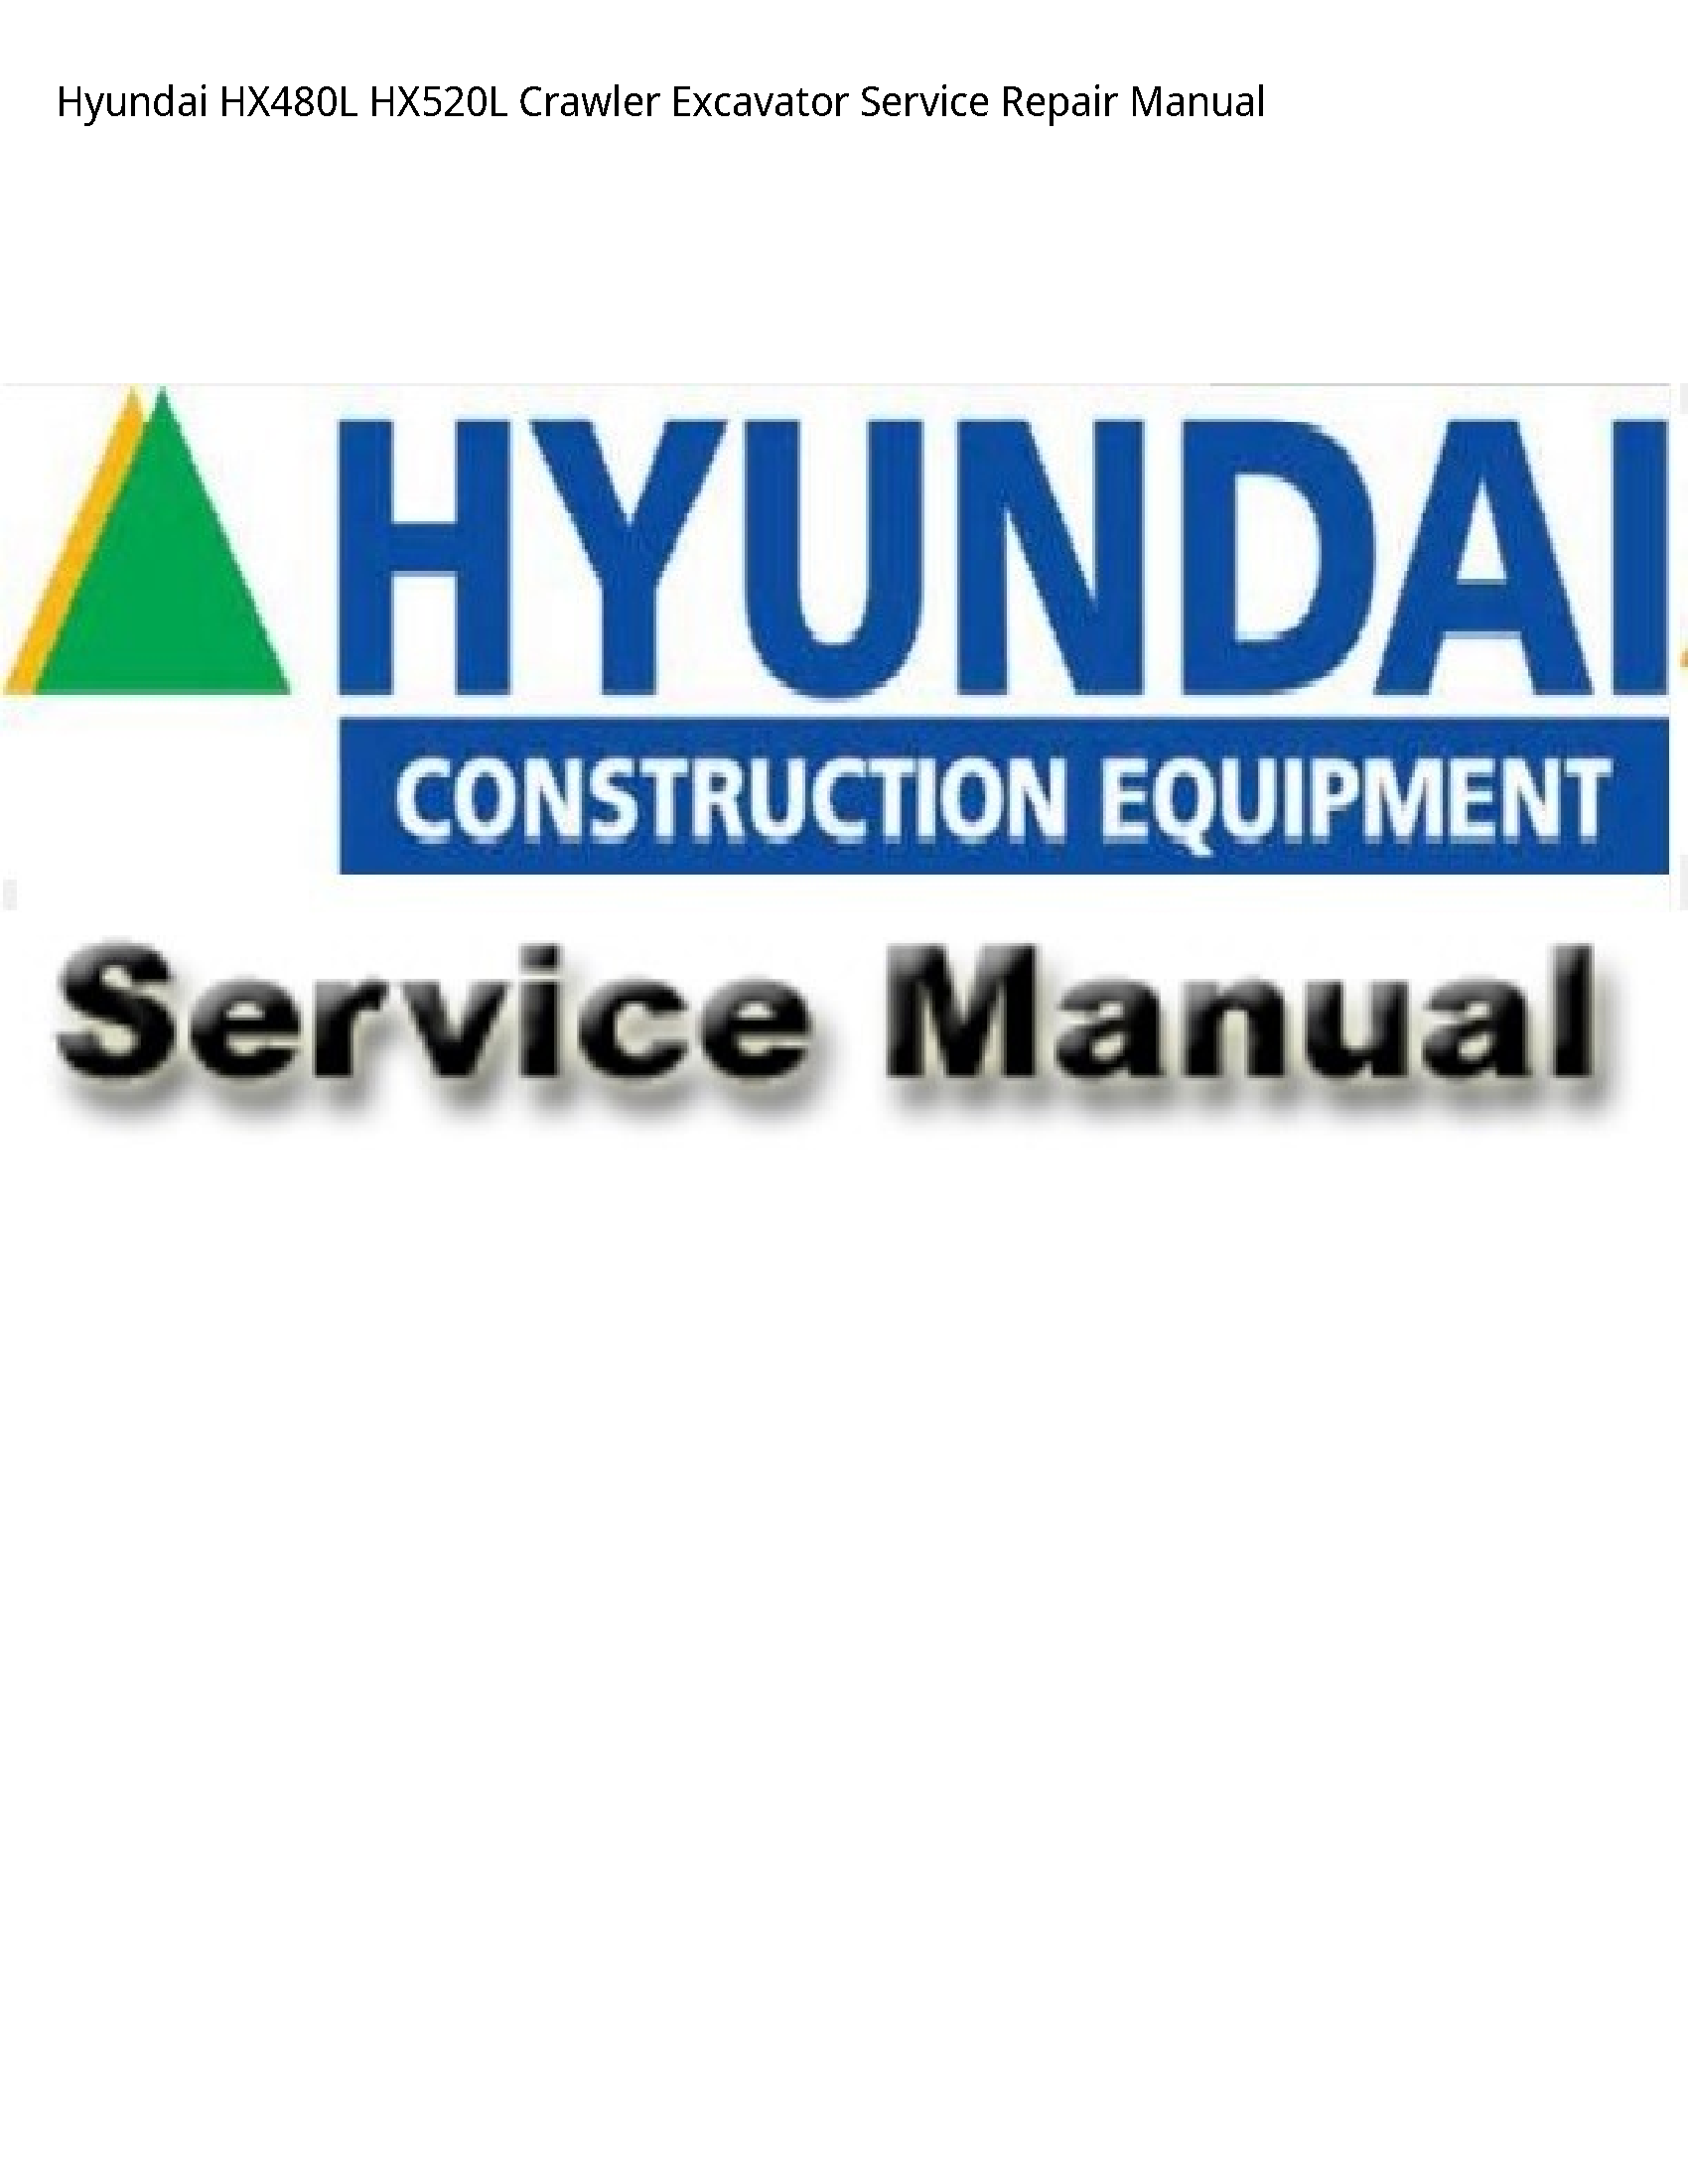 Hyundai HX480L Crawler Excavator manual